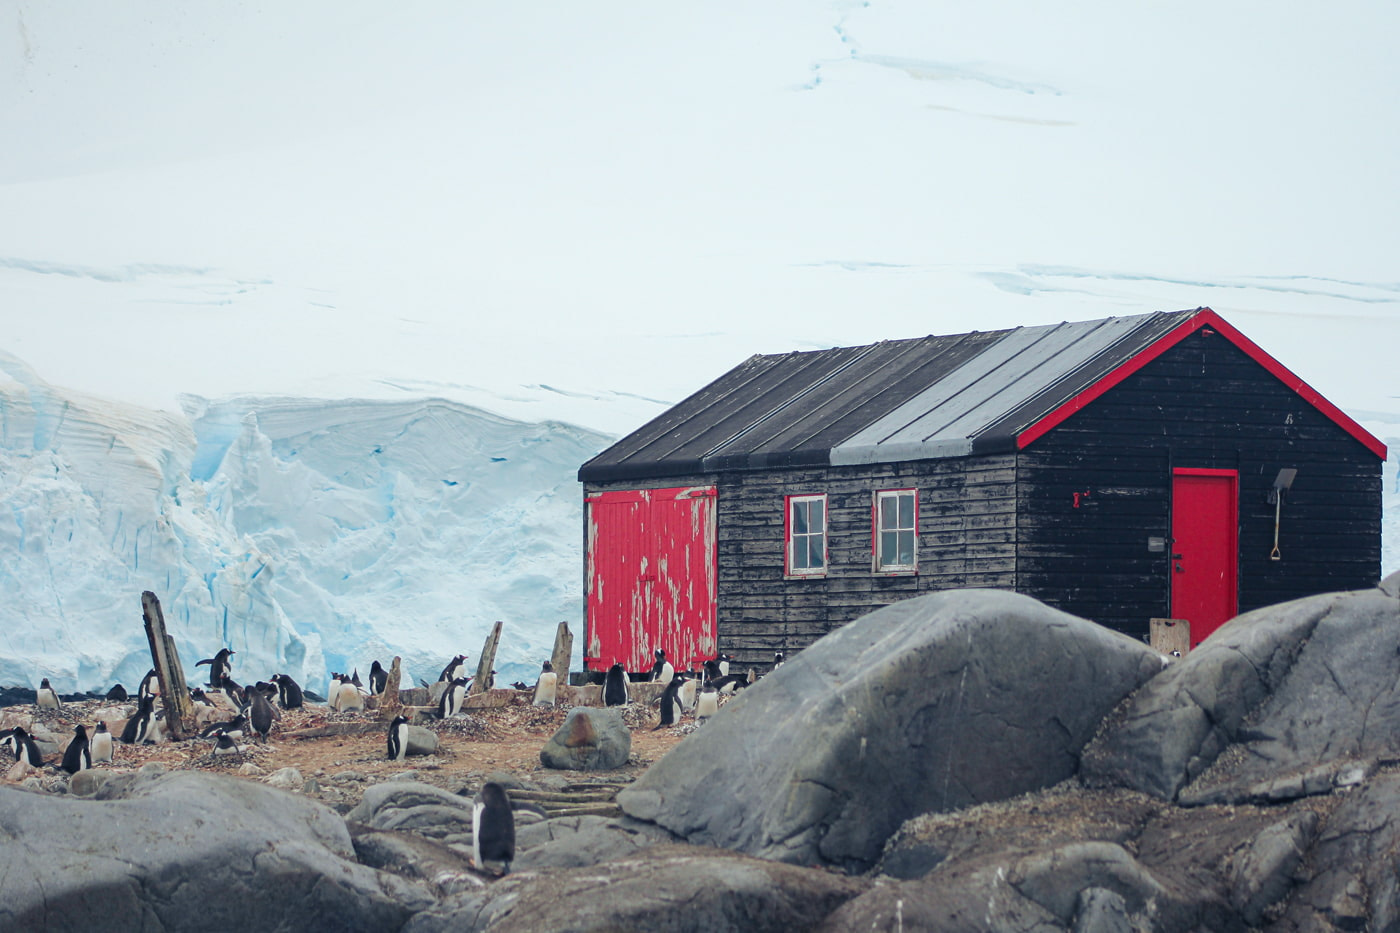 The Penguin Post Office